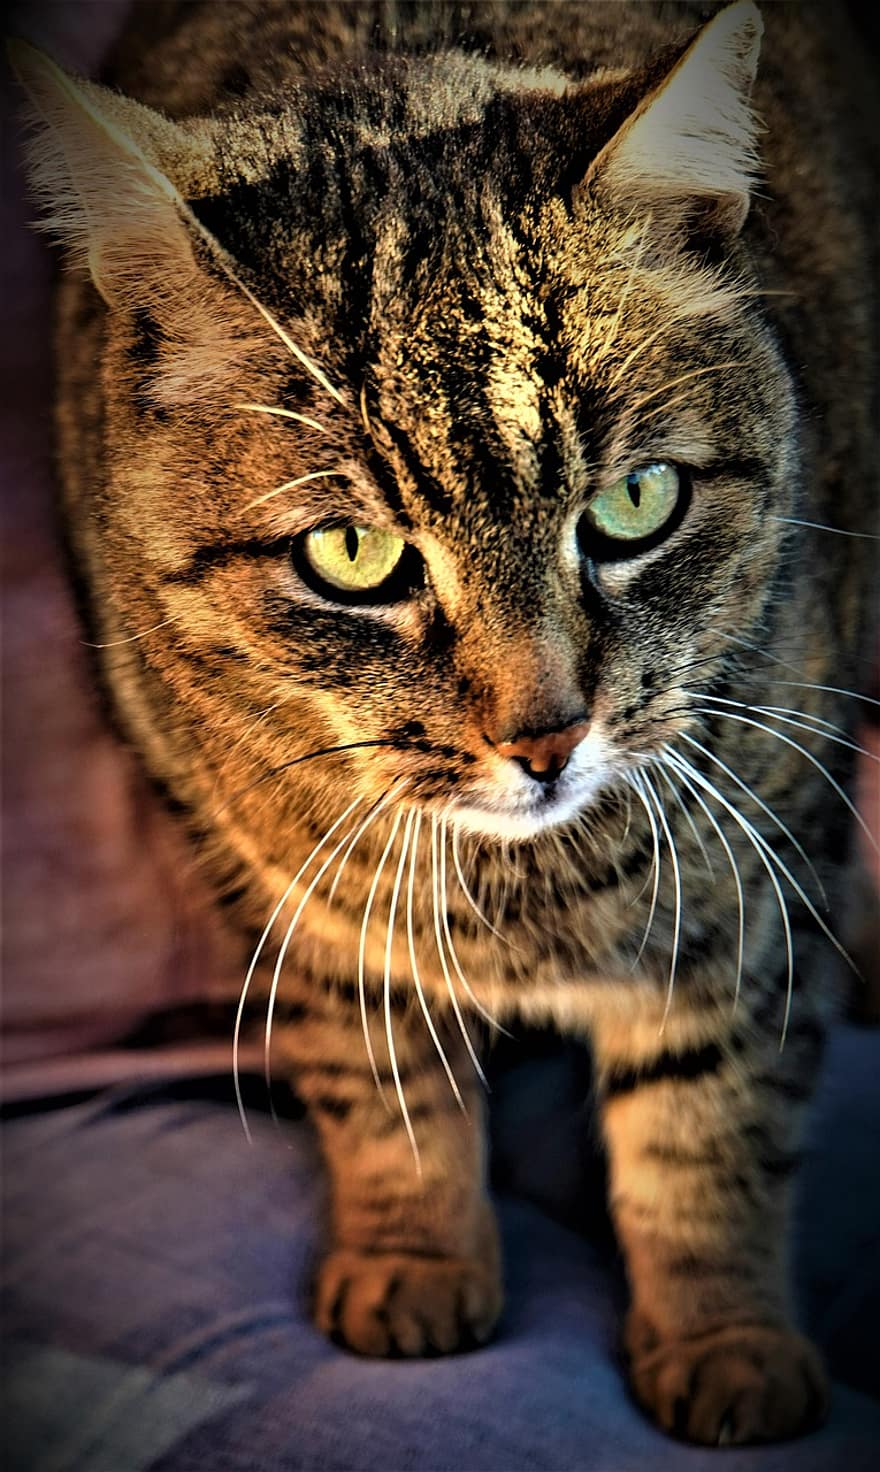 gato, animal, retrato, tigre de la casa, gatito, ojos, Tigre, Ojos de gato, ojos verdes, belleza, curioso